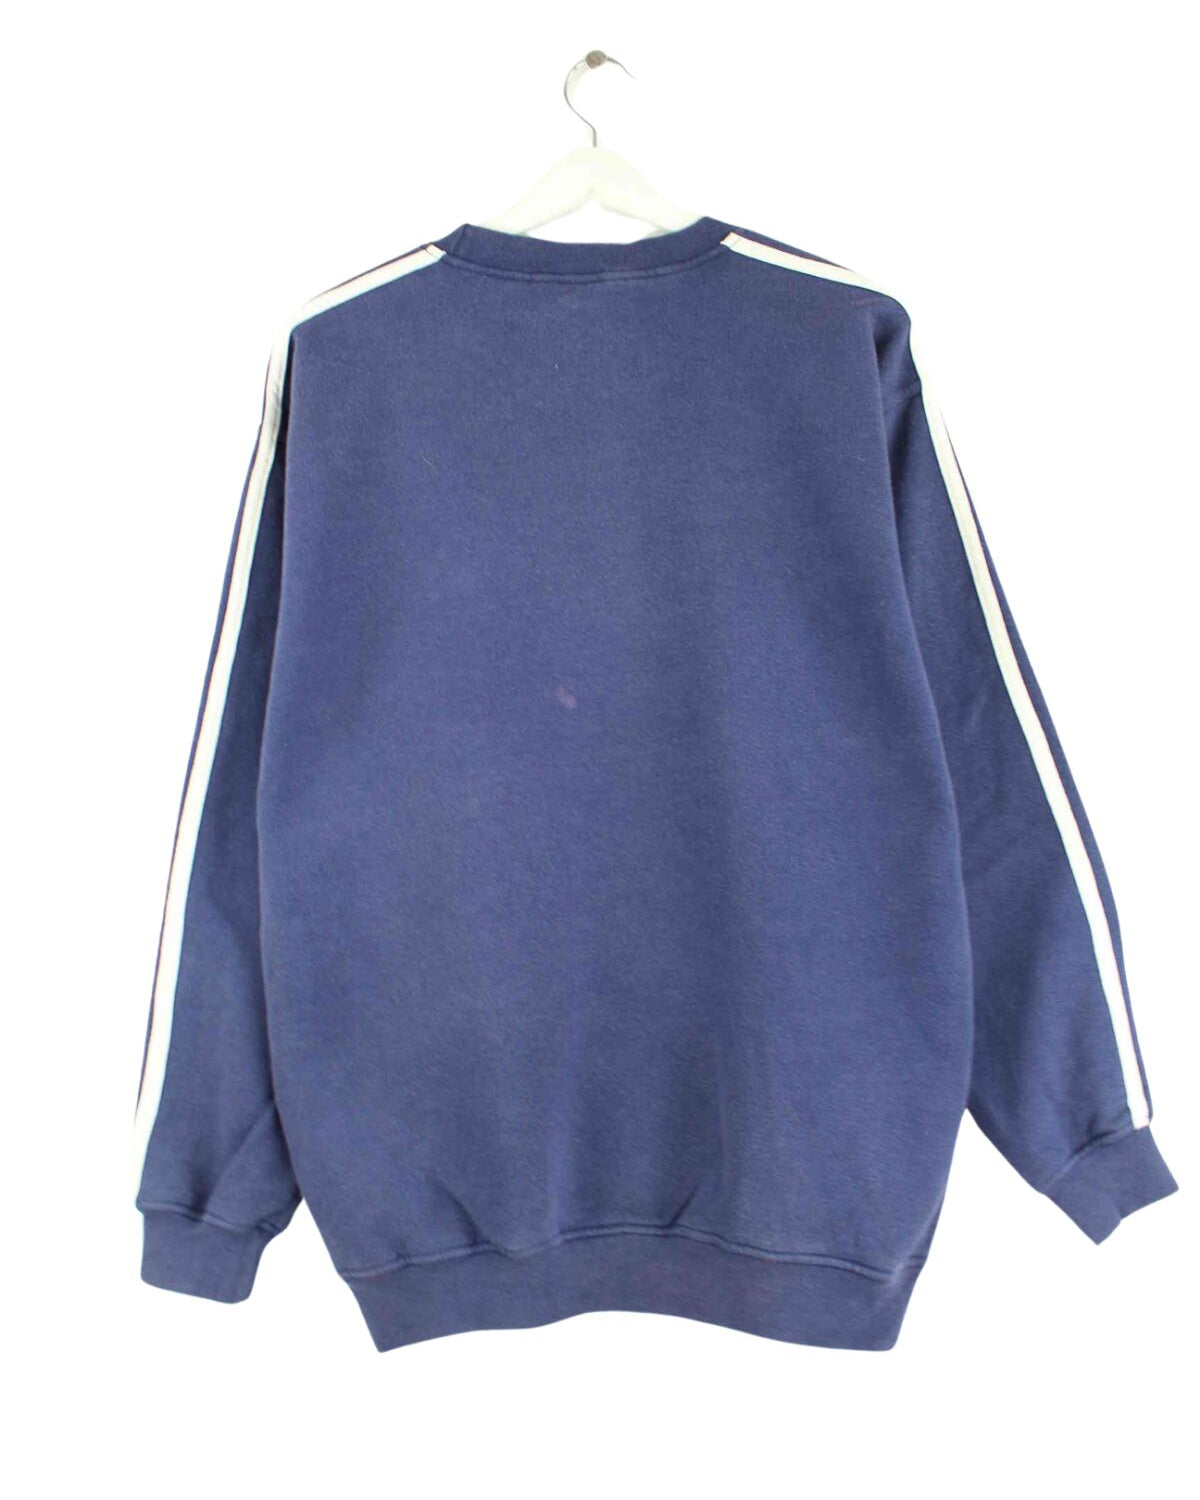 Adidas 90s Vintage 3-Stripes Sweater Blau L (back image)